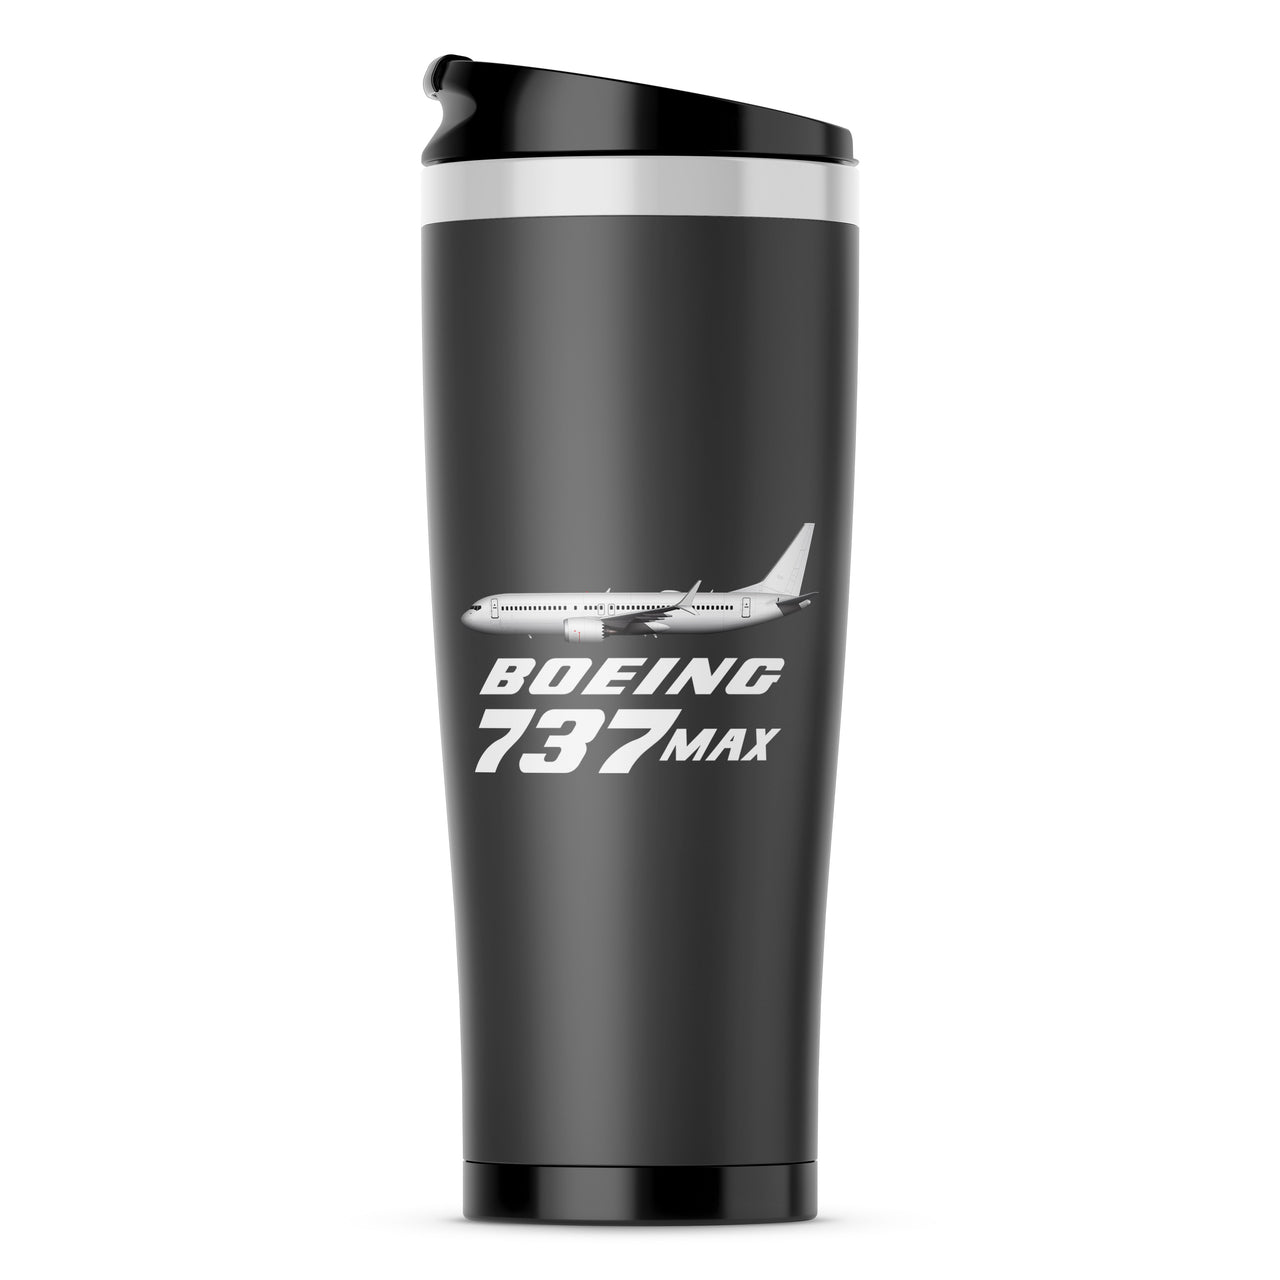 The Boeing 737Max Designed Travel Mugs